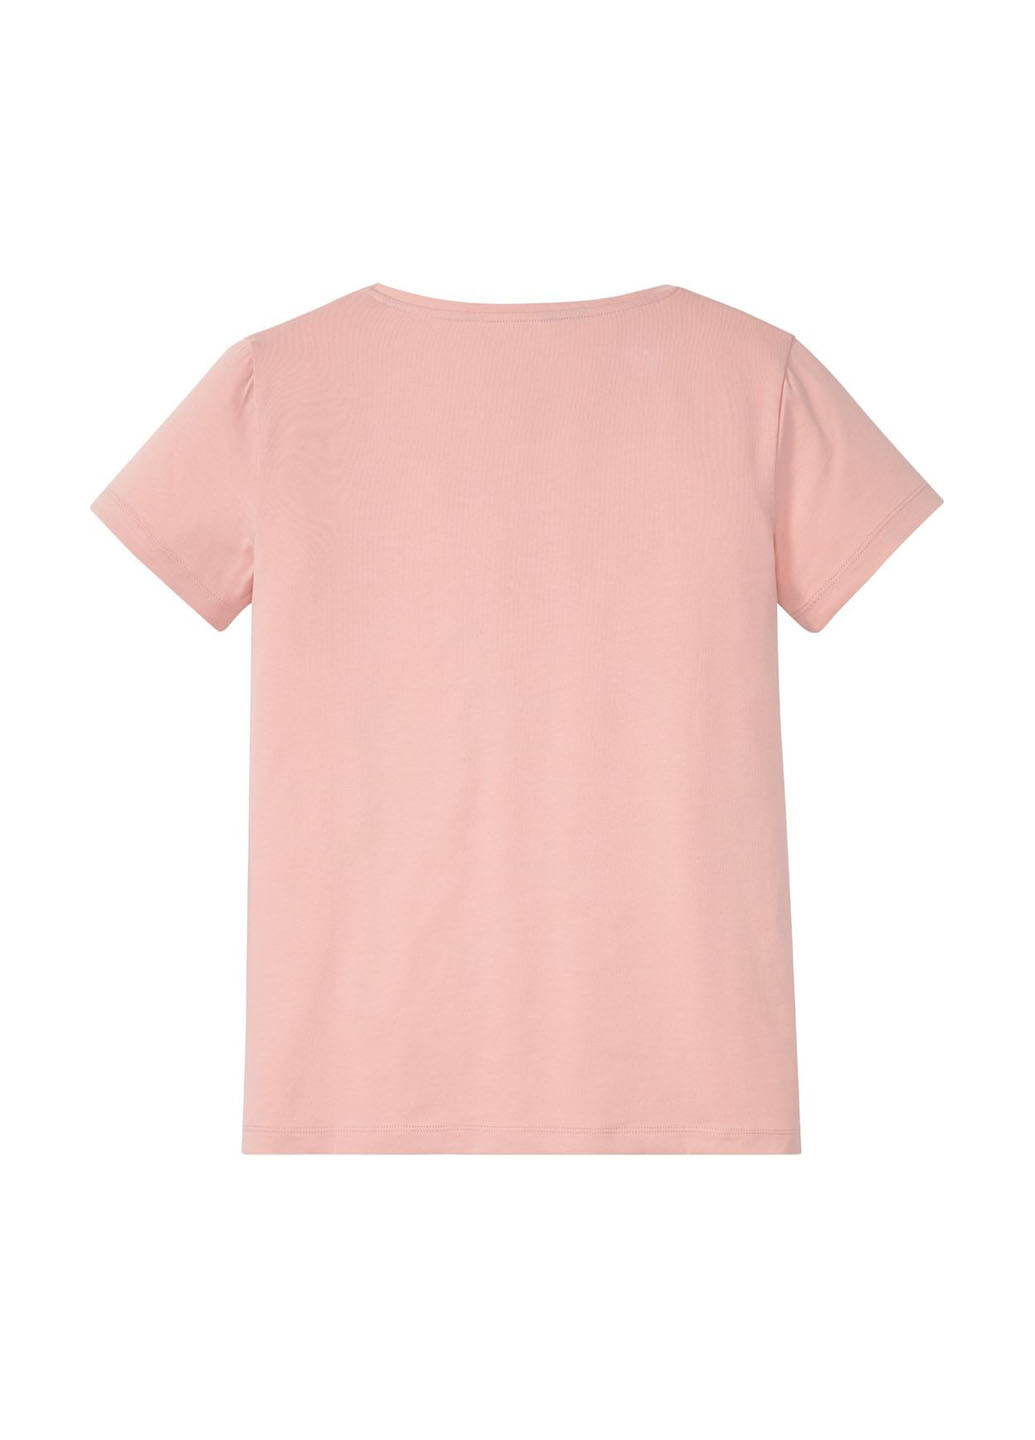 Персикова всесезон піжама (футболка, шорти) футболка + шорти Esmara